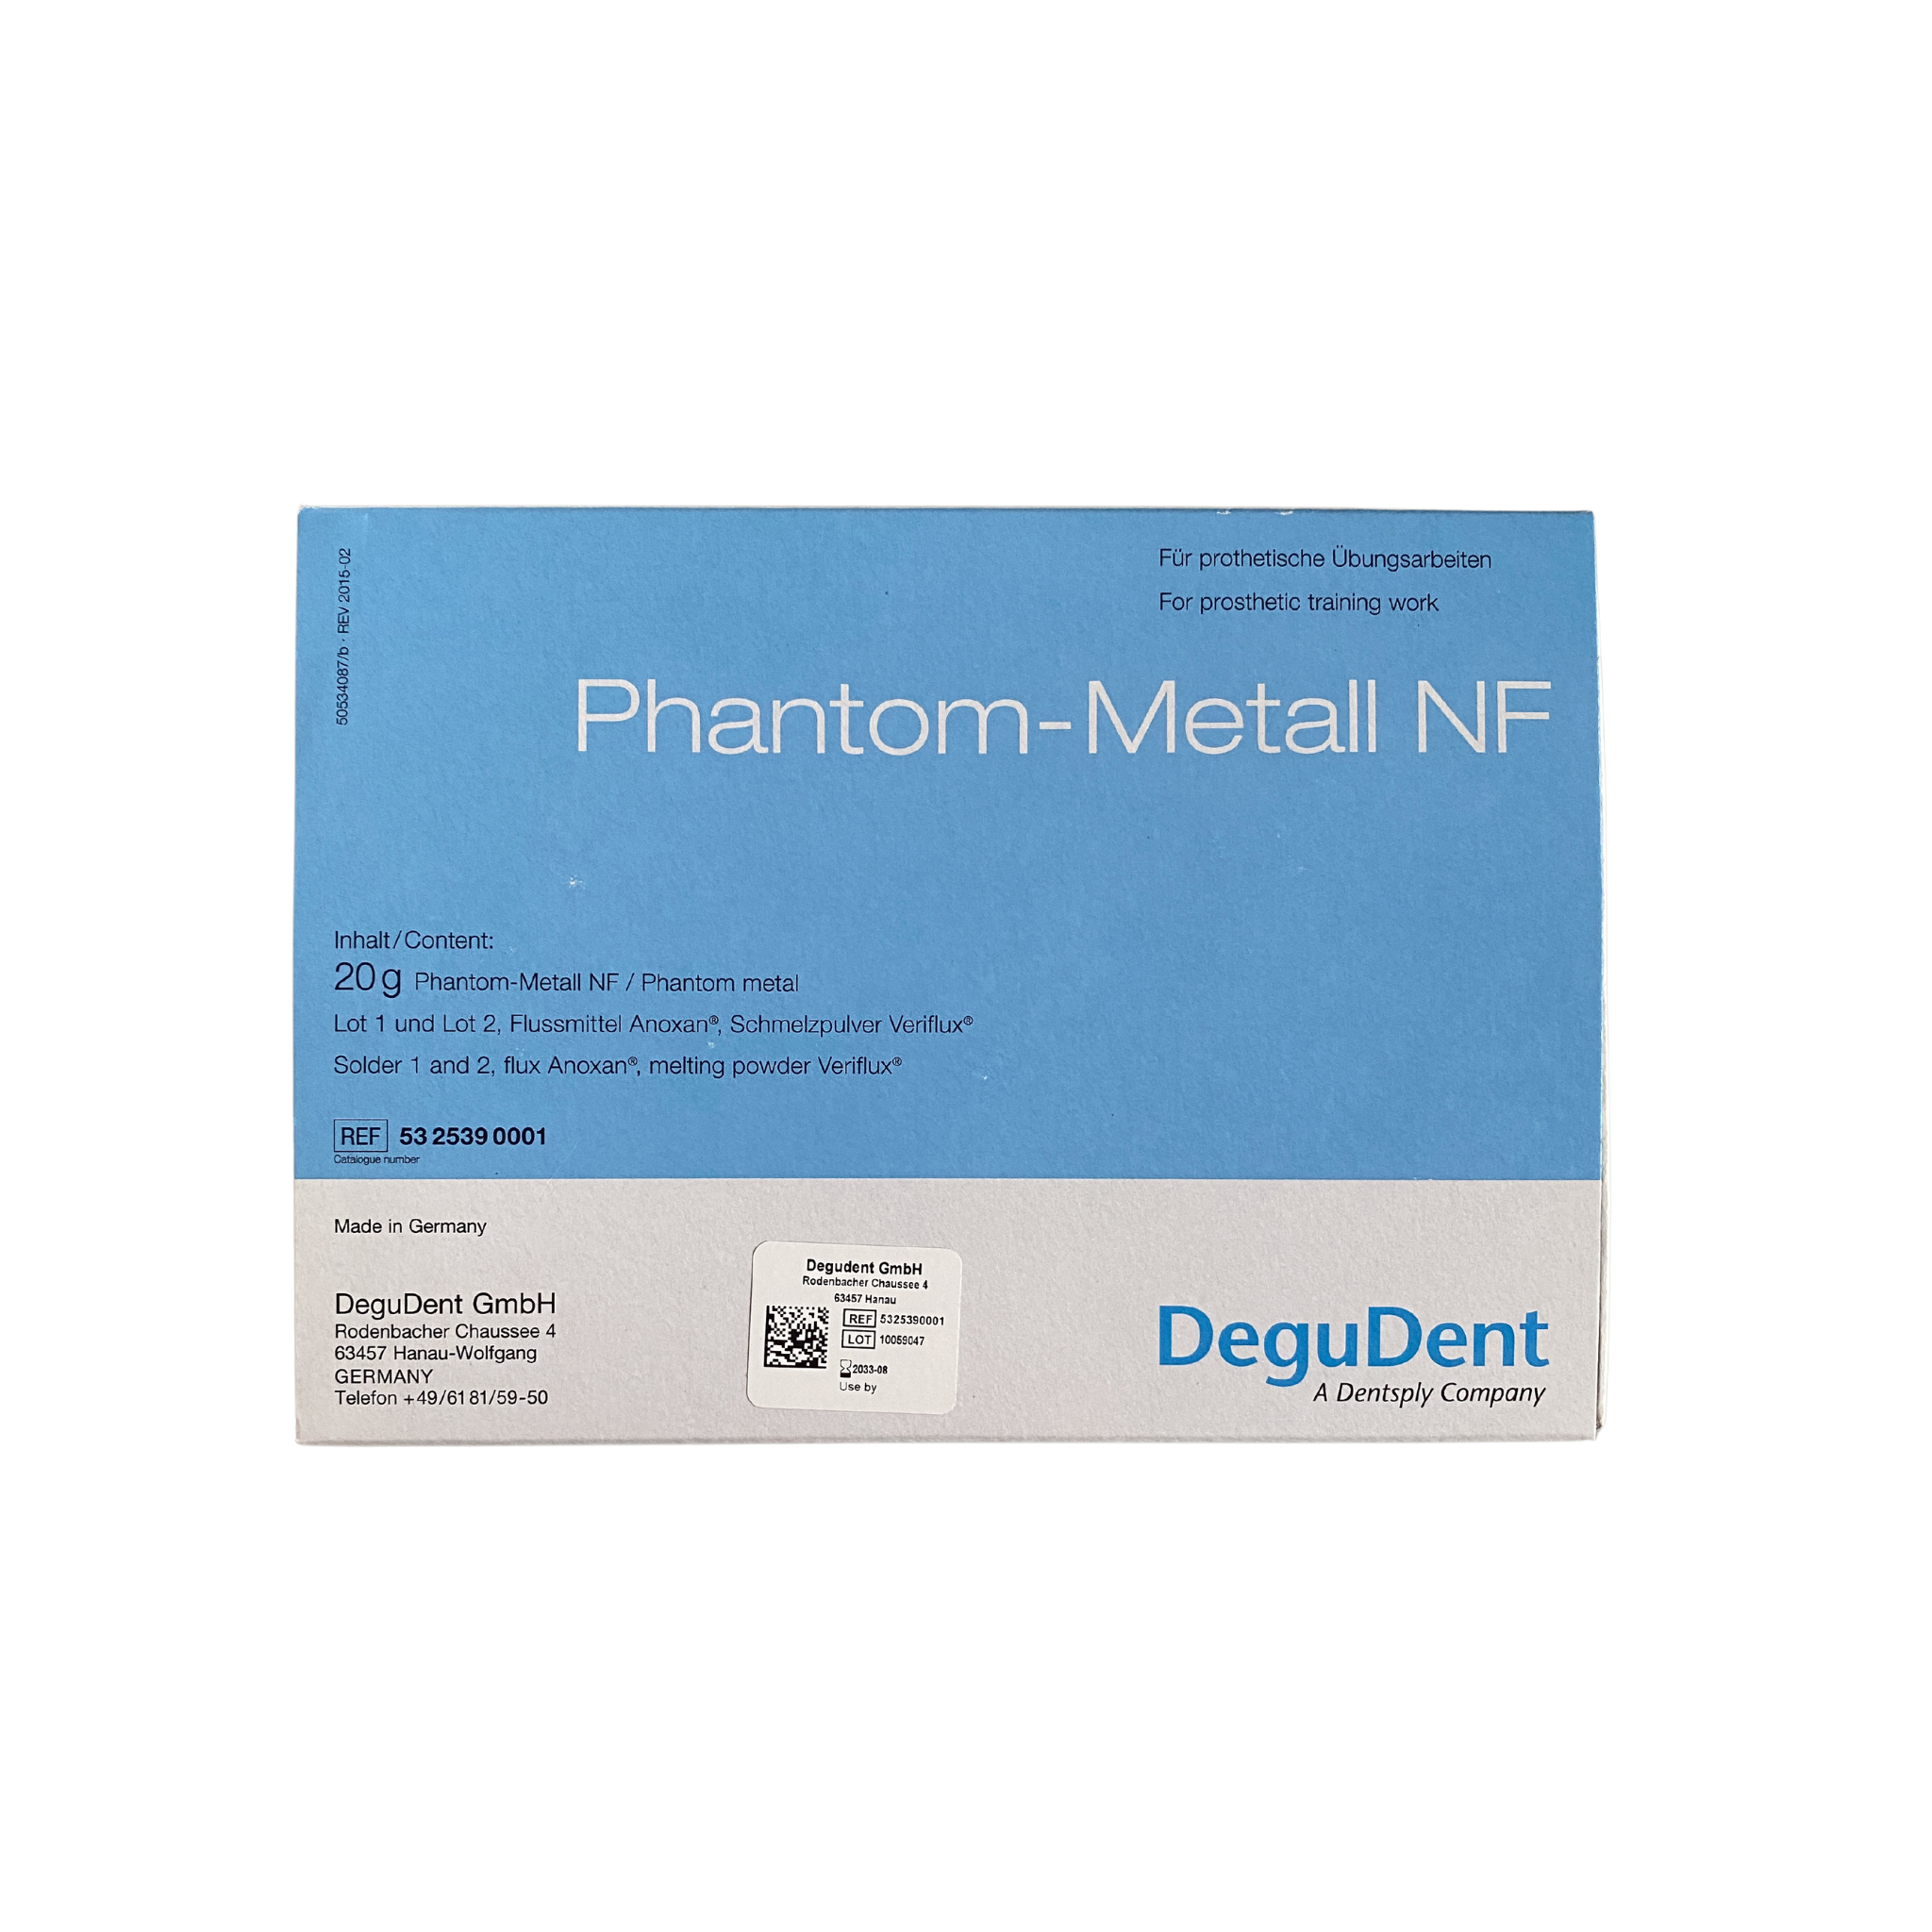 Phantom Metal NF Introduction Pack